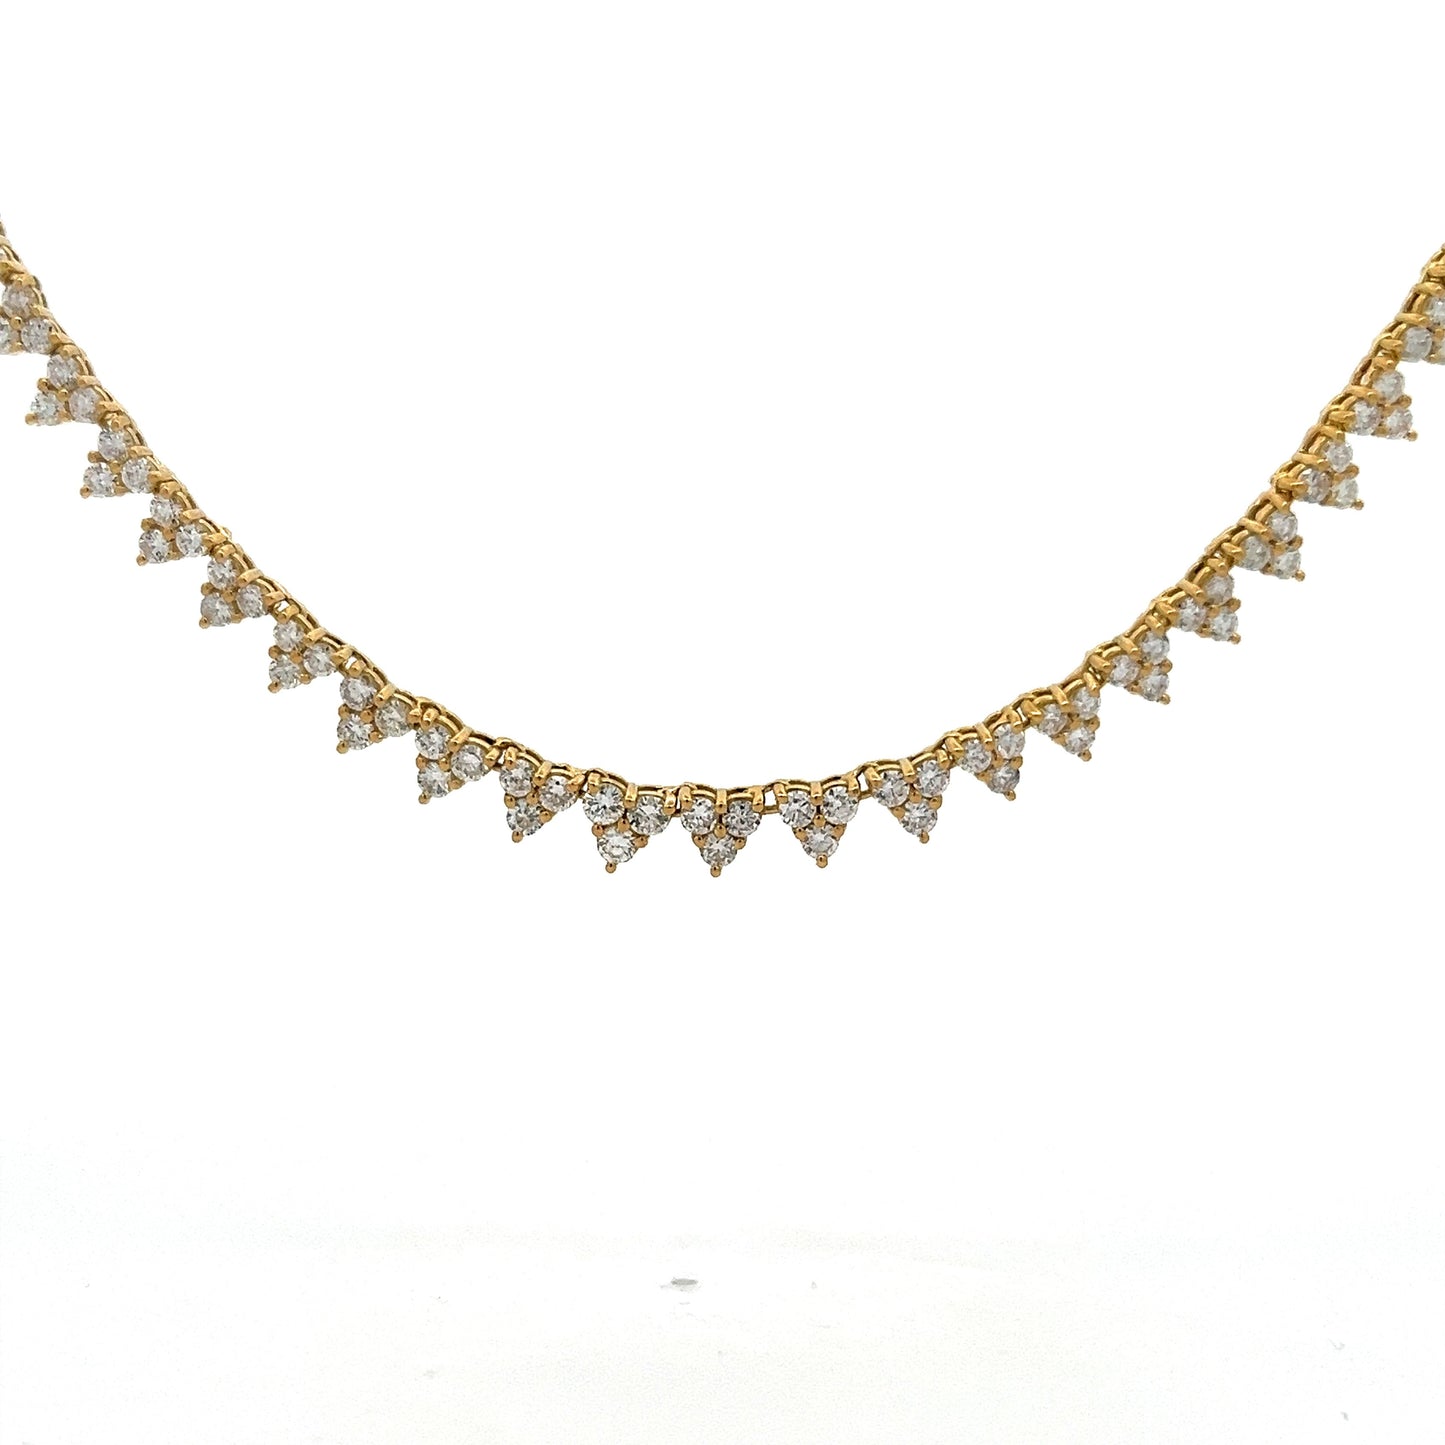 10 Carat Diamond Riviera Necklace in 18k Yellow Gold